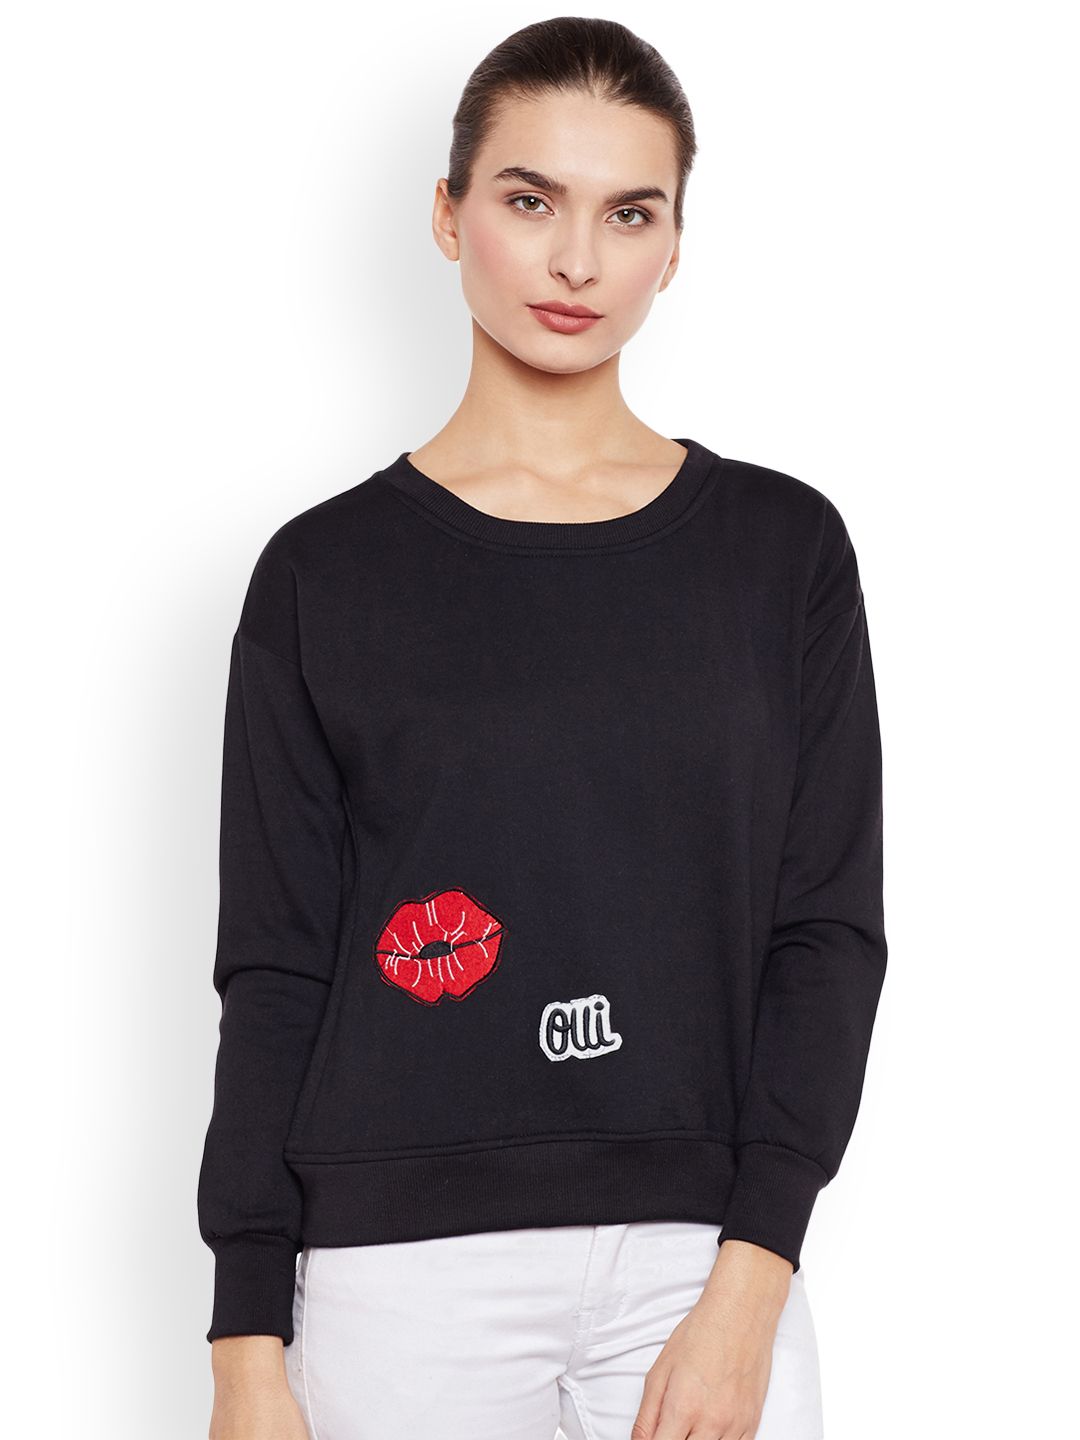 Belle Fille Women Black Solid Sweatshirt Price in India